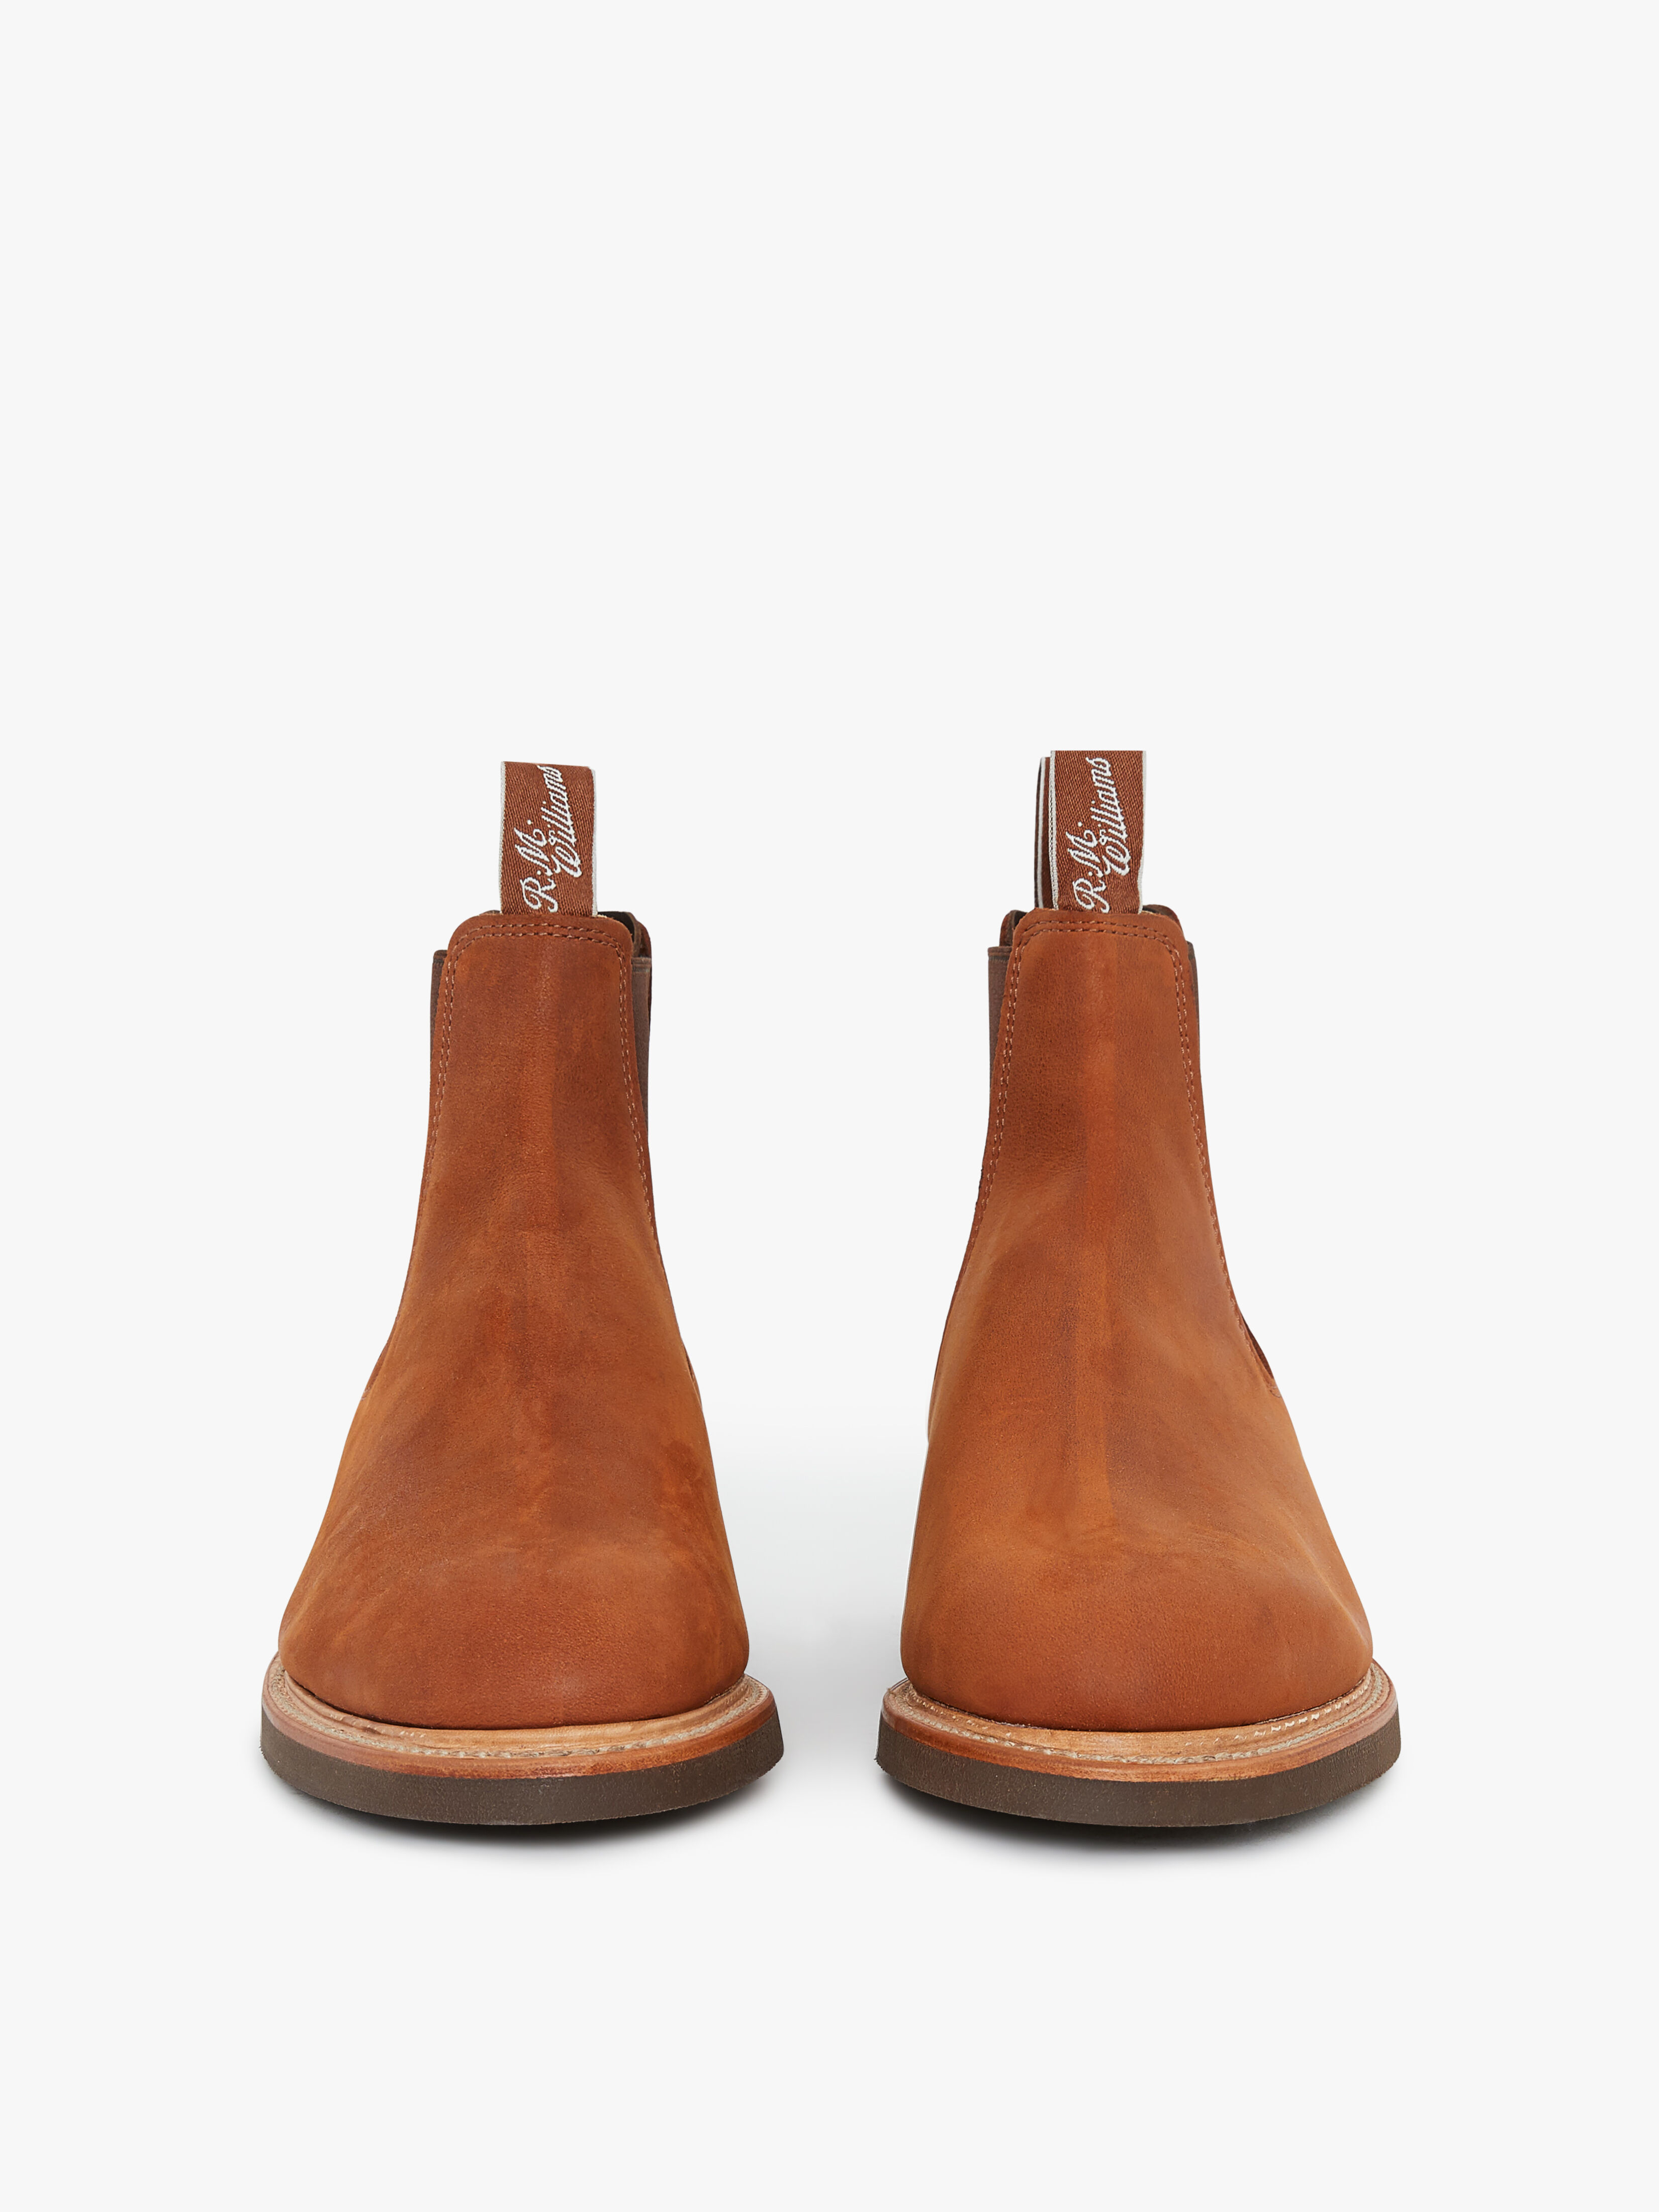 australian chelsea boots